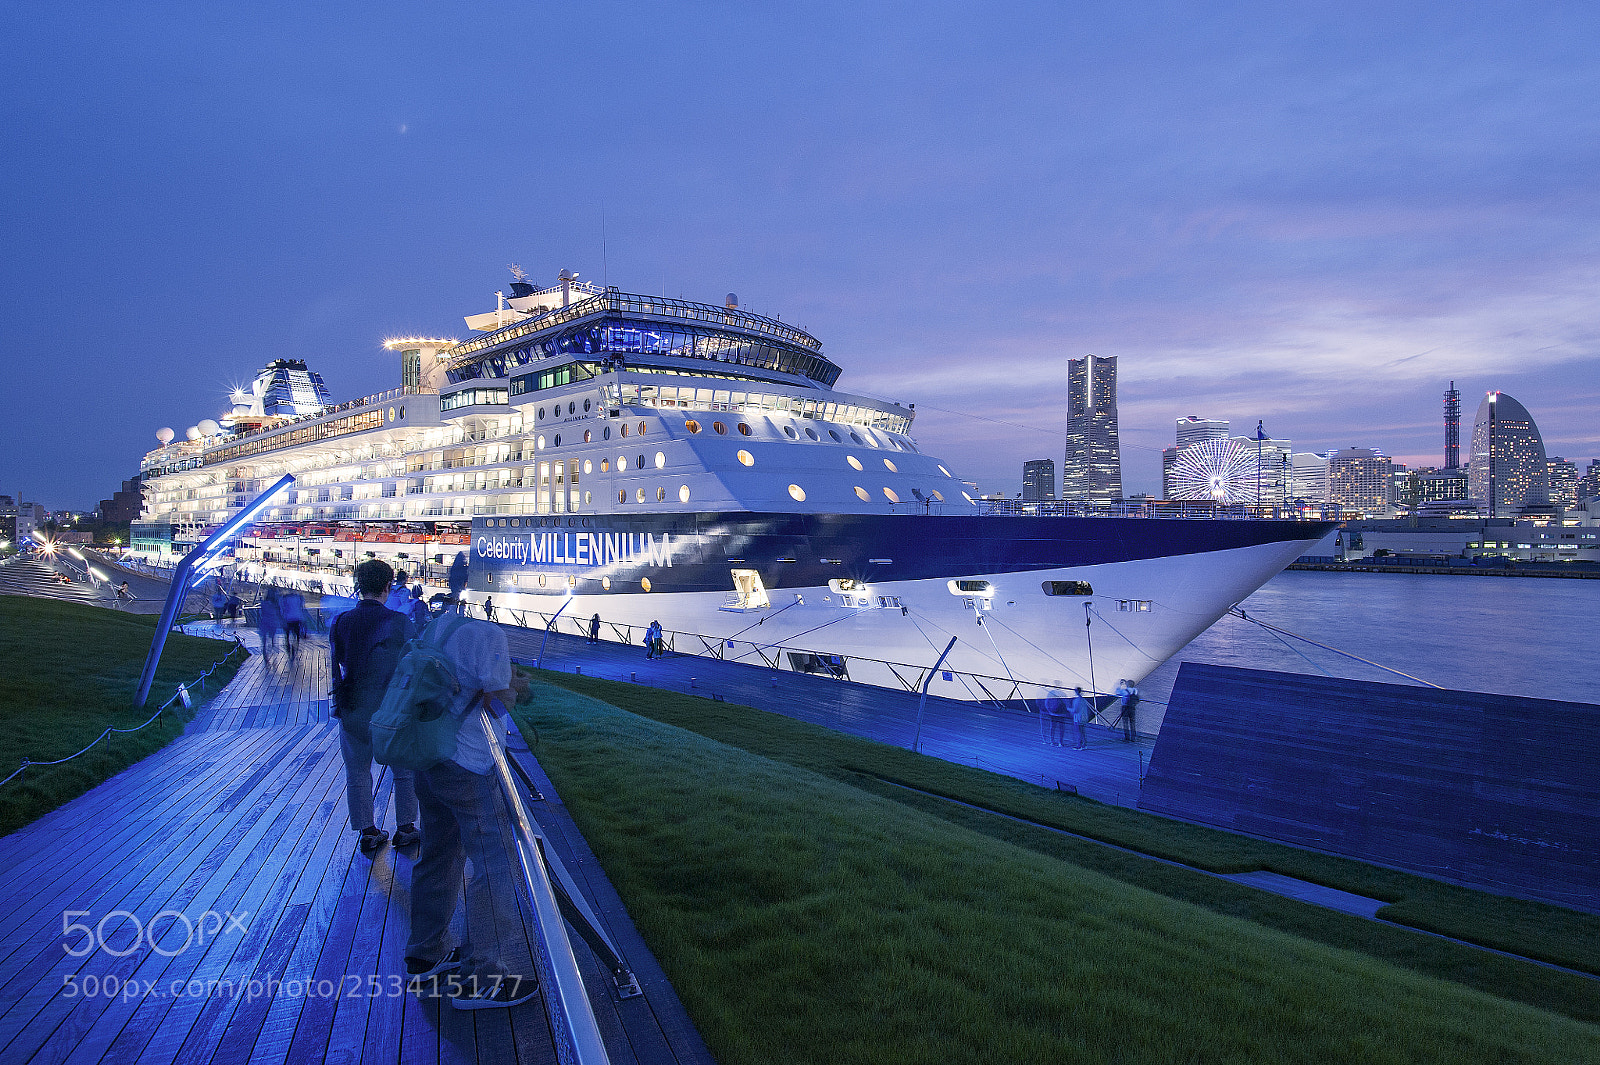 Nikon D3 sample photo. Cruise ships> celebrity millennium photography